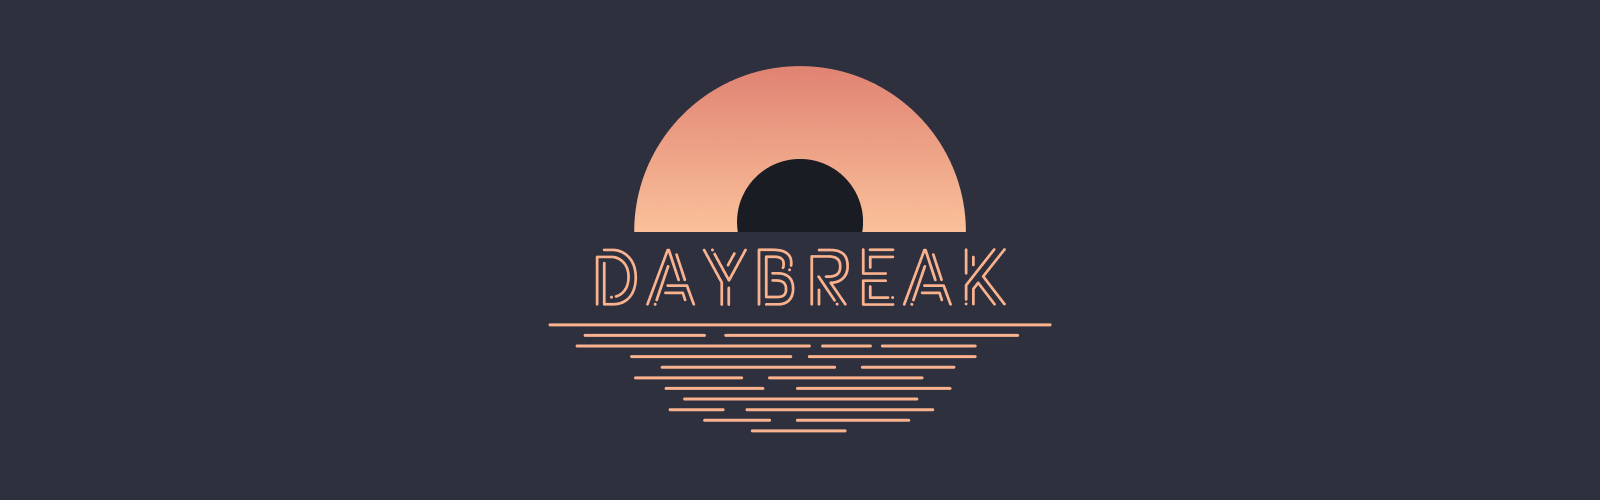 daybreak banner